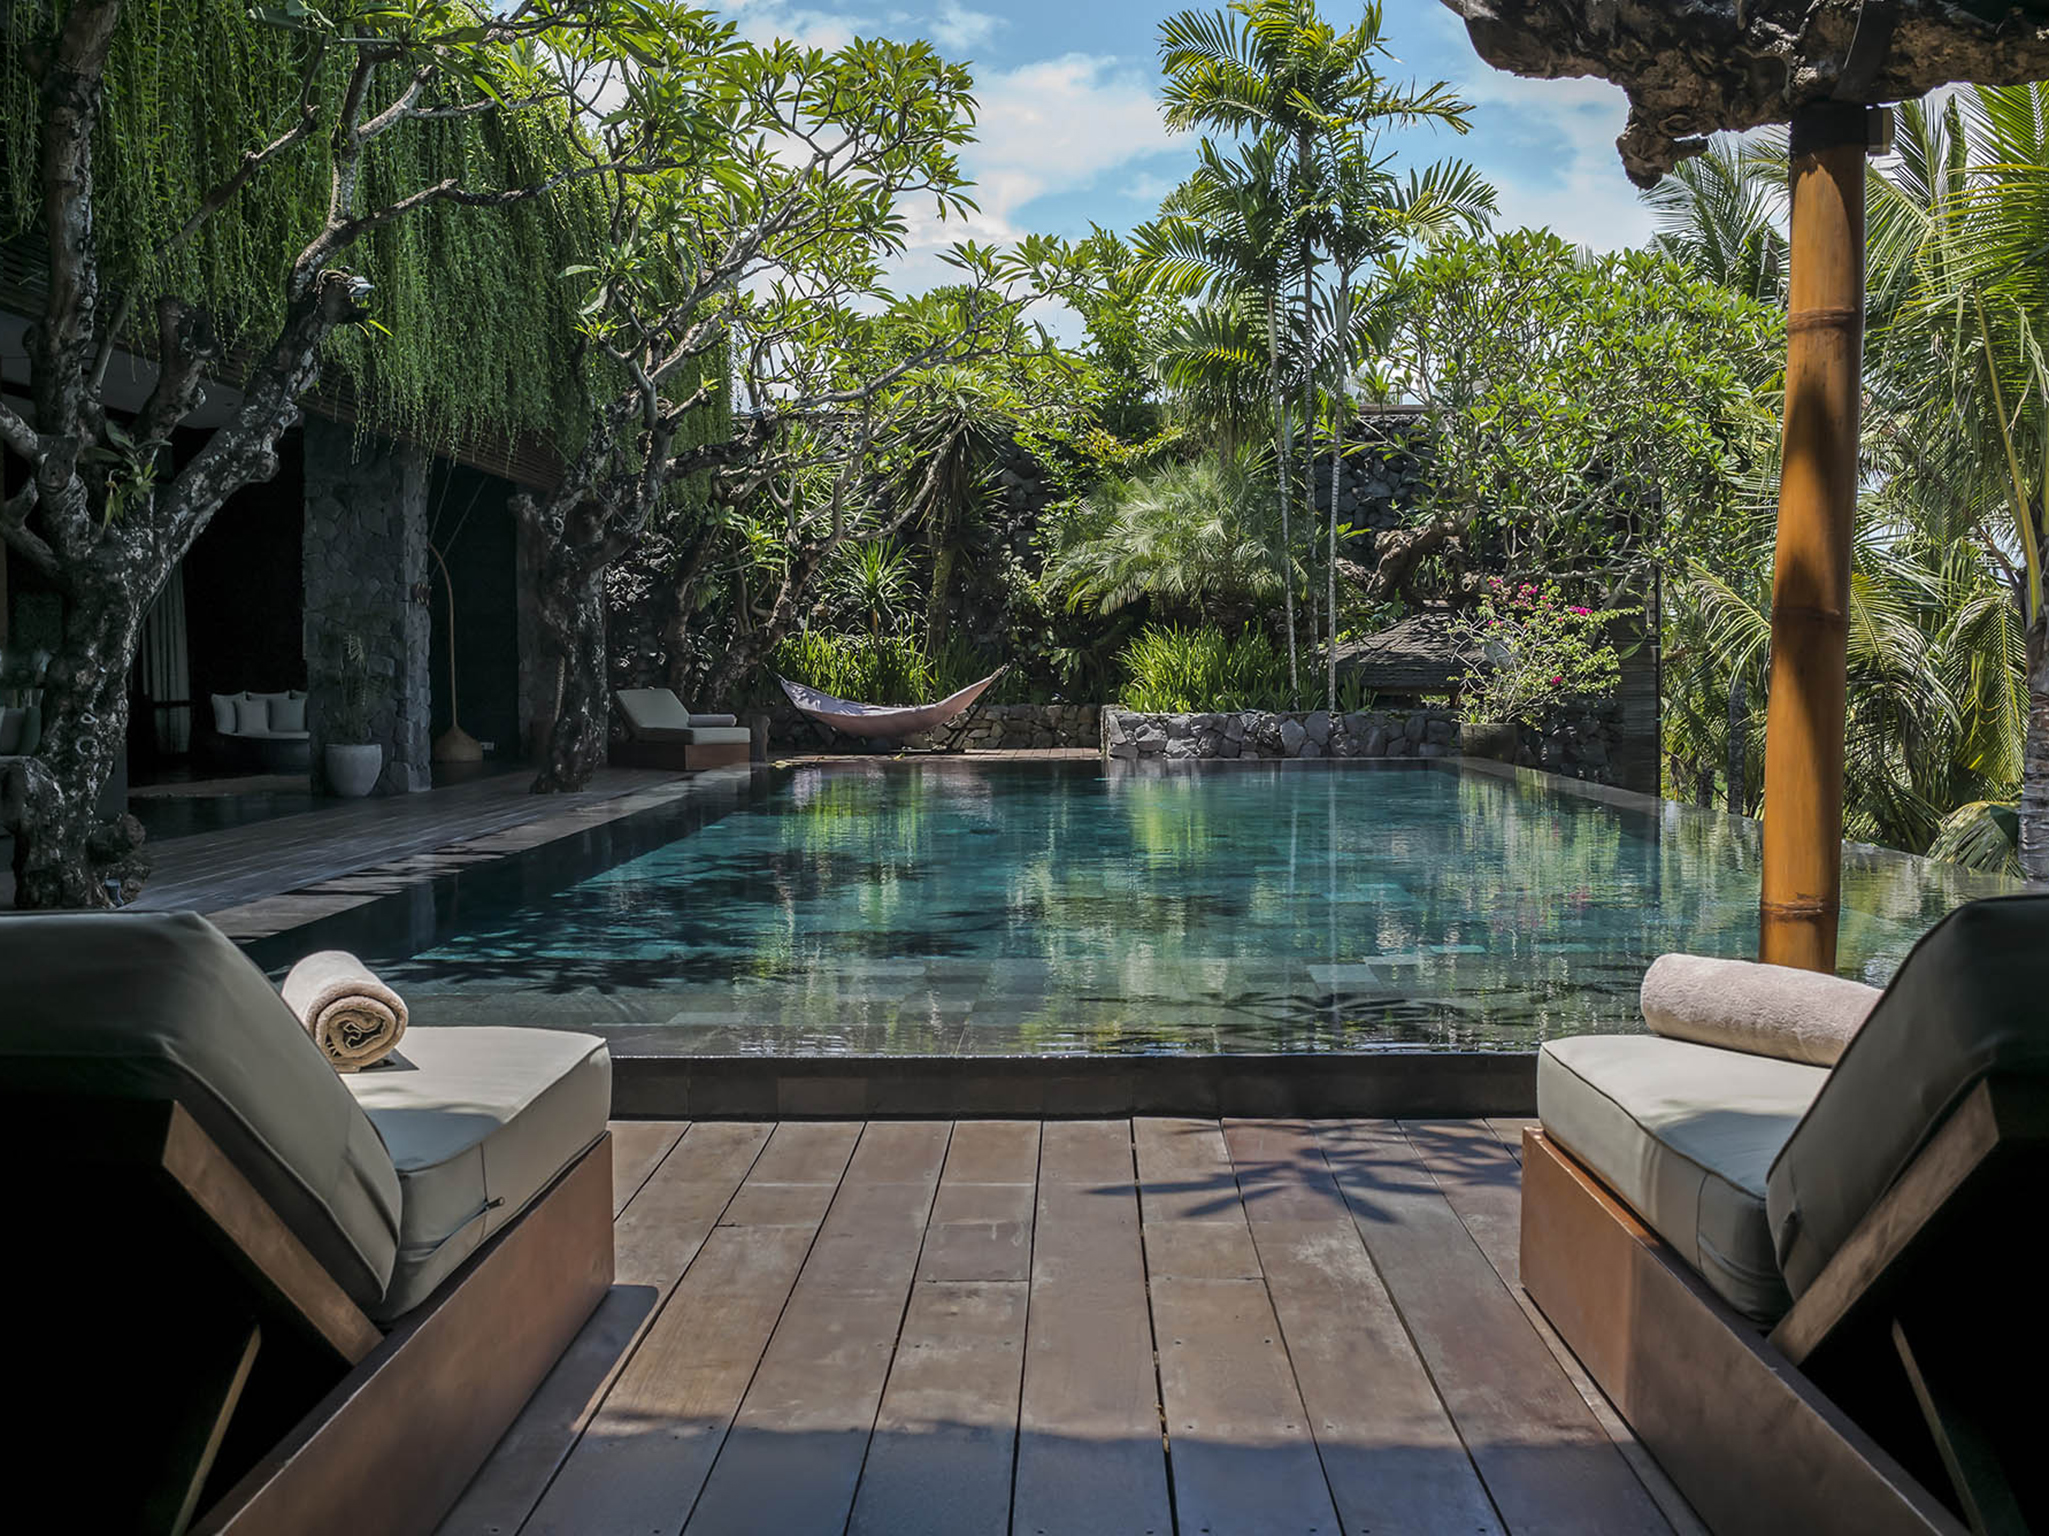 Villa Mana - From the pool edge - Villa Mana, Canggu, Bali